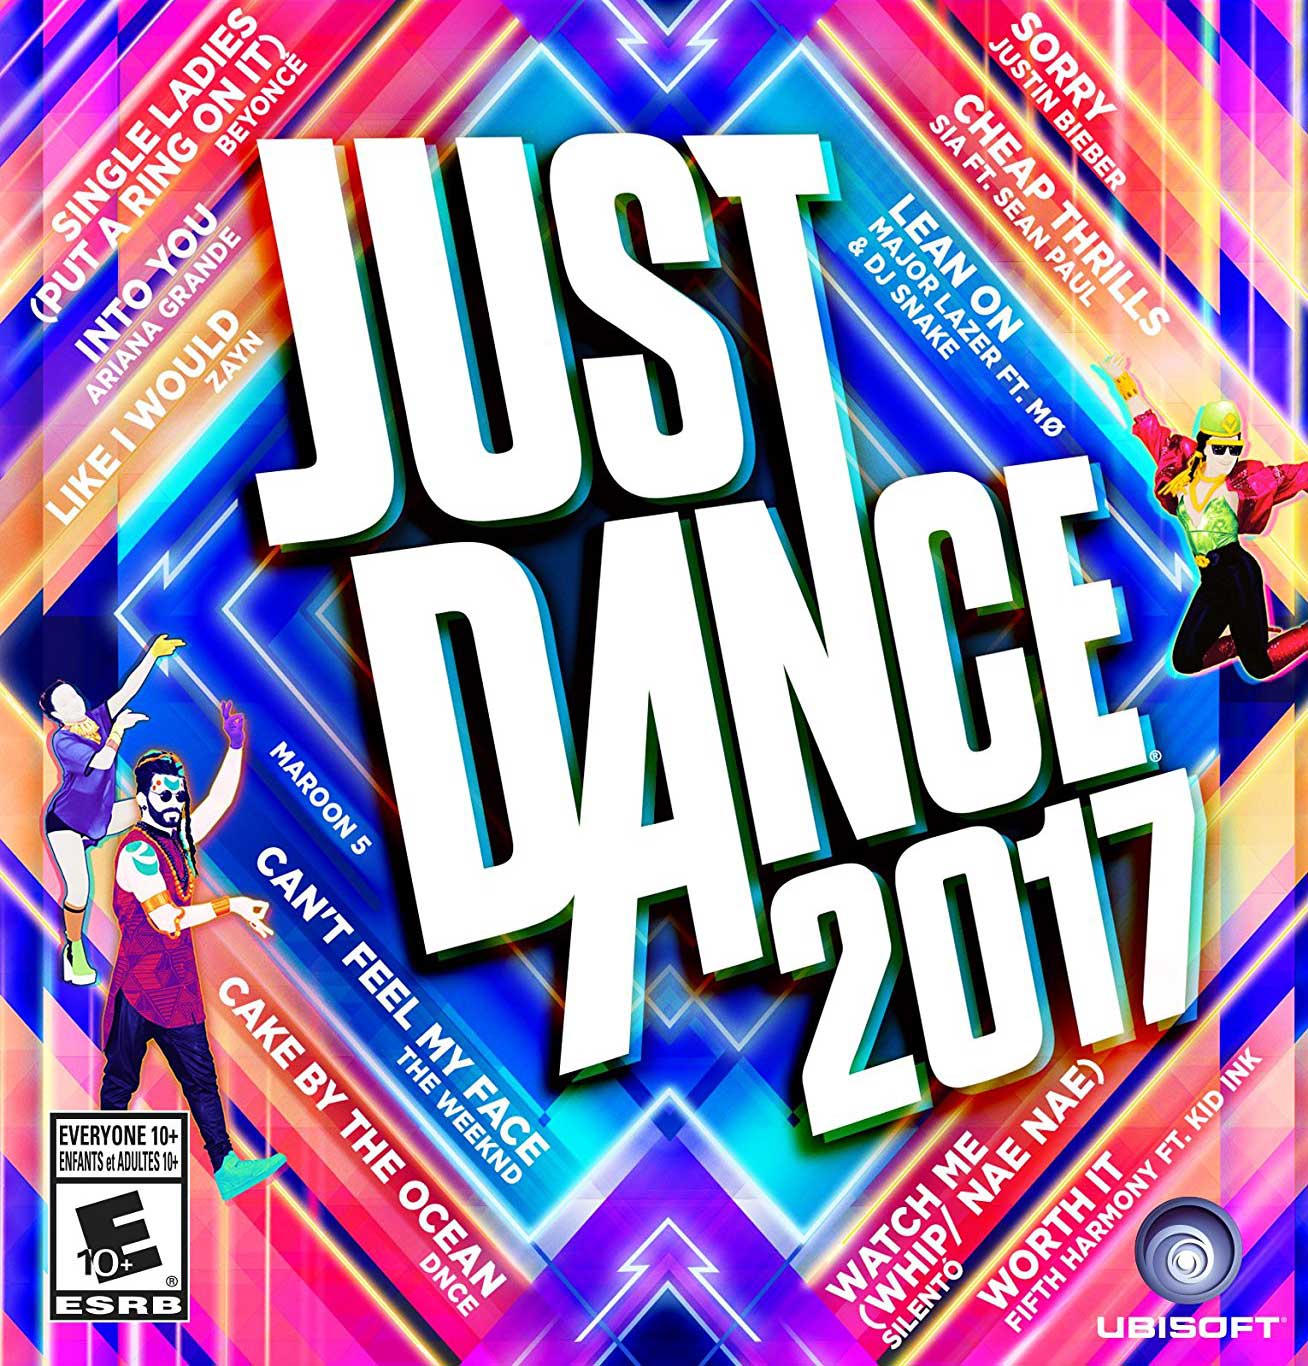 just dance 2017 wii